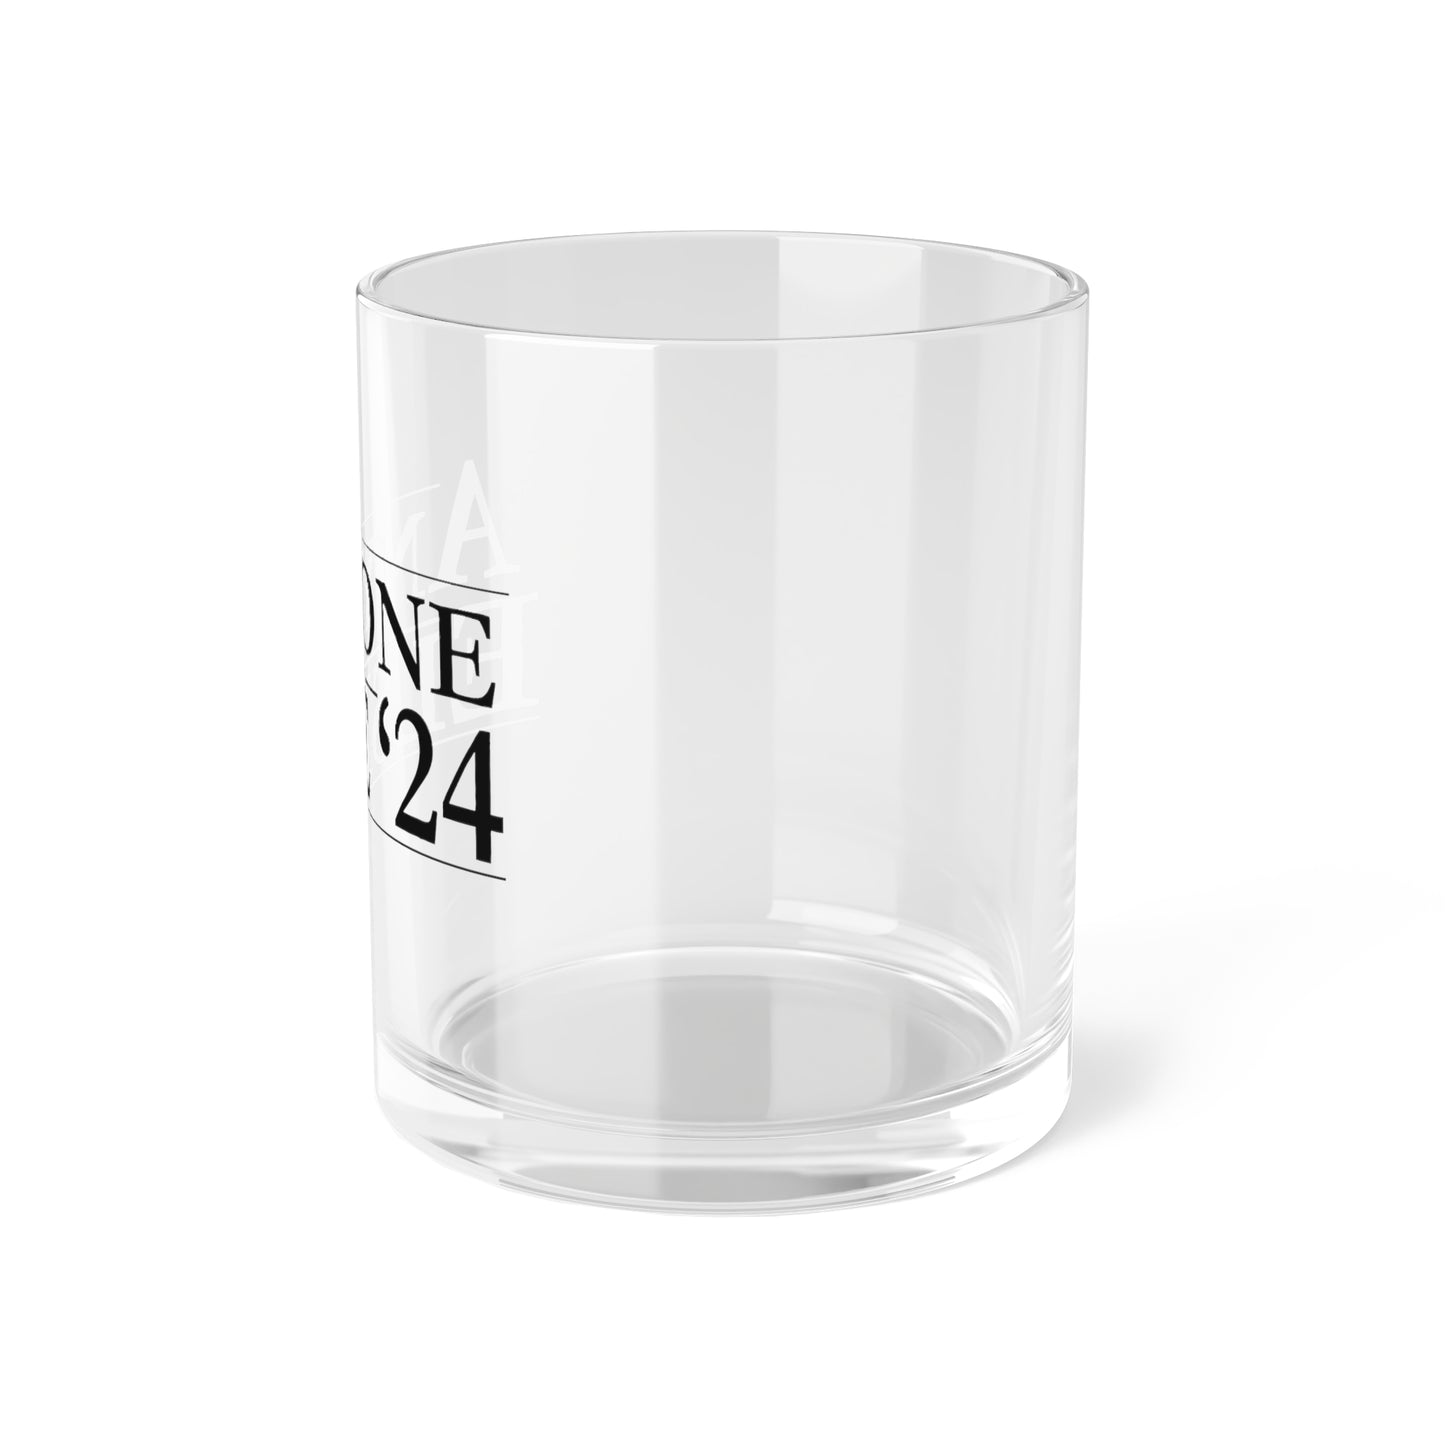 Bar Glass - Anyone Else '24